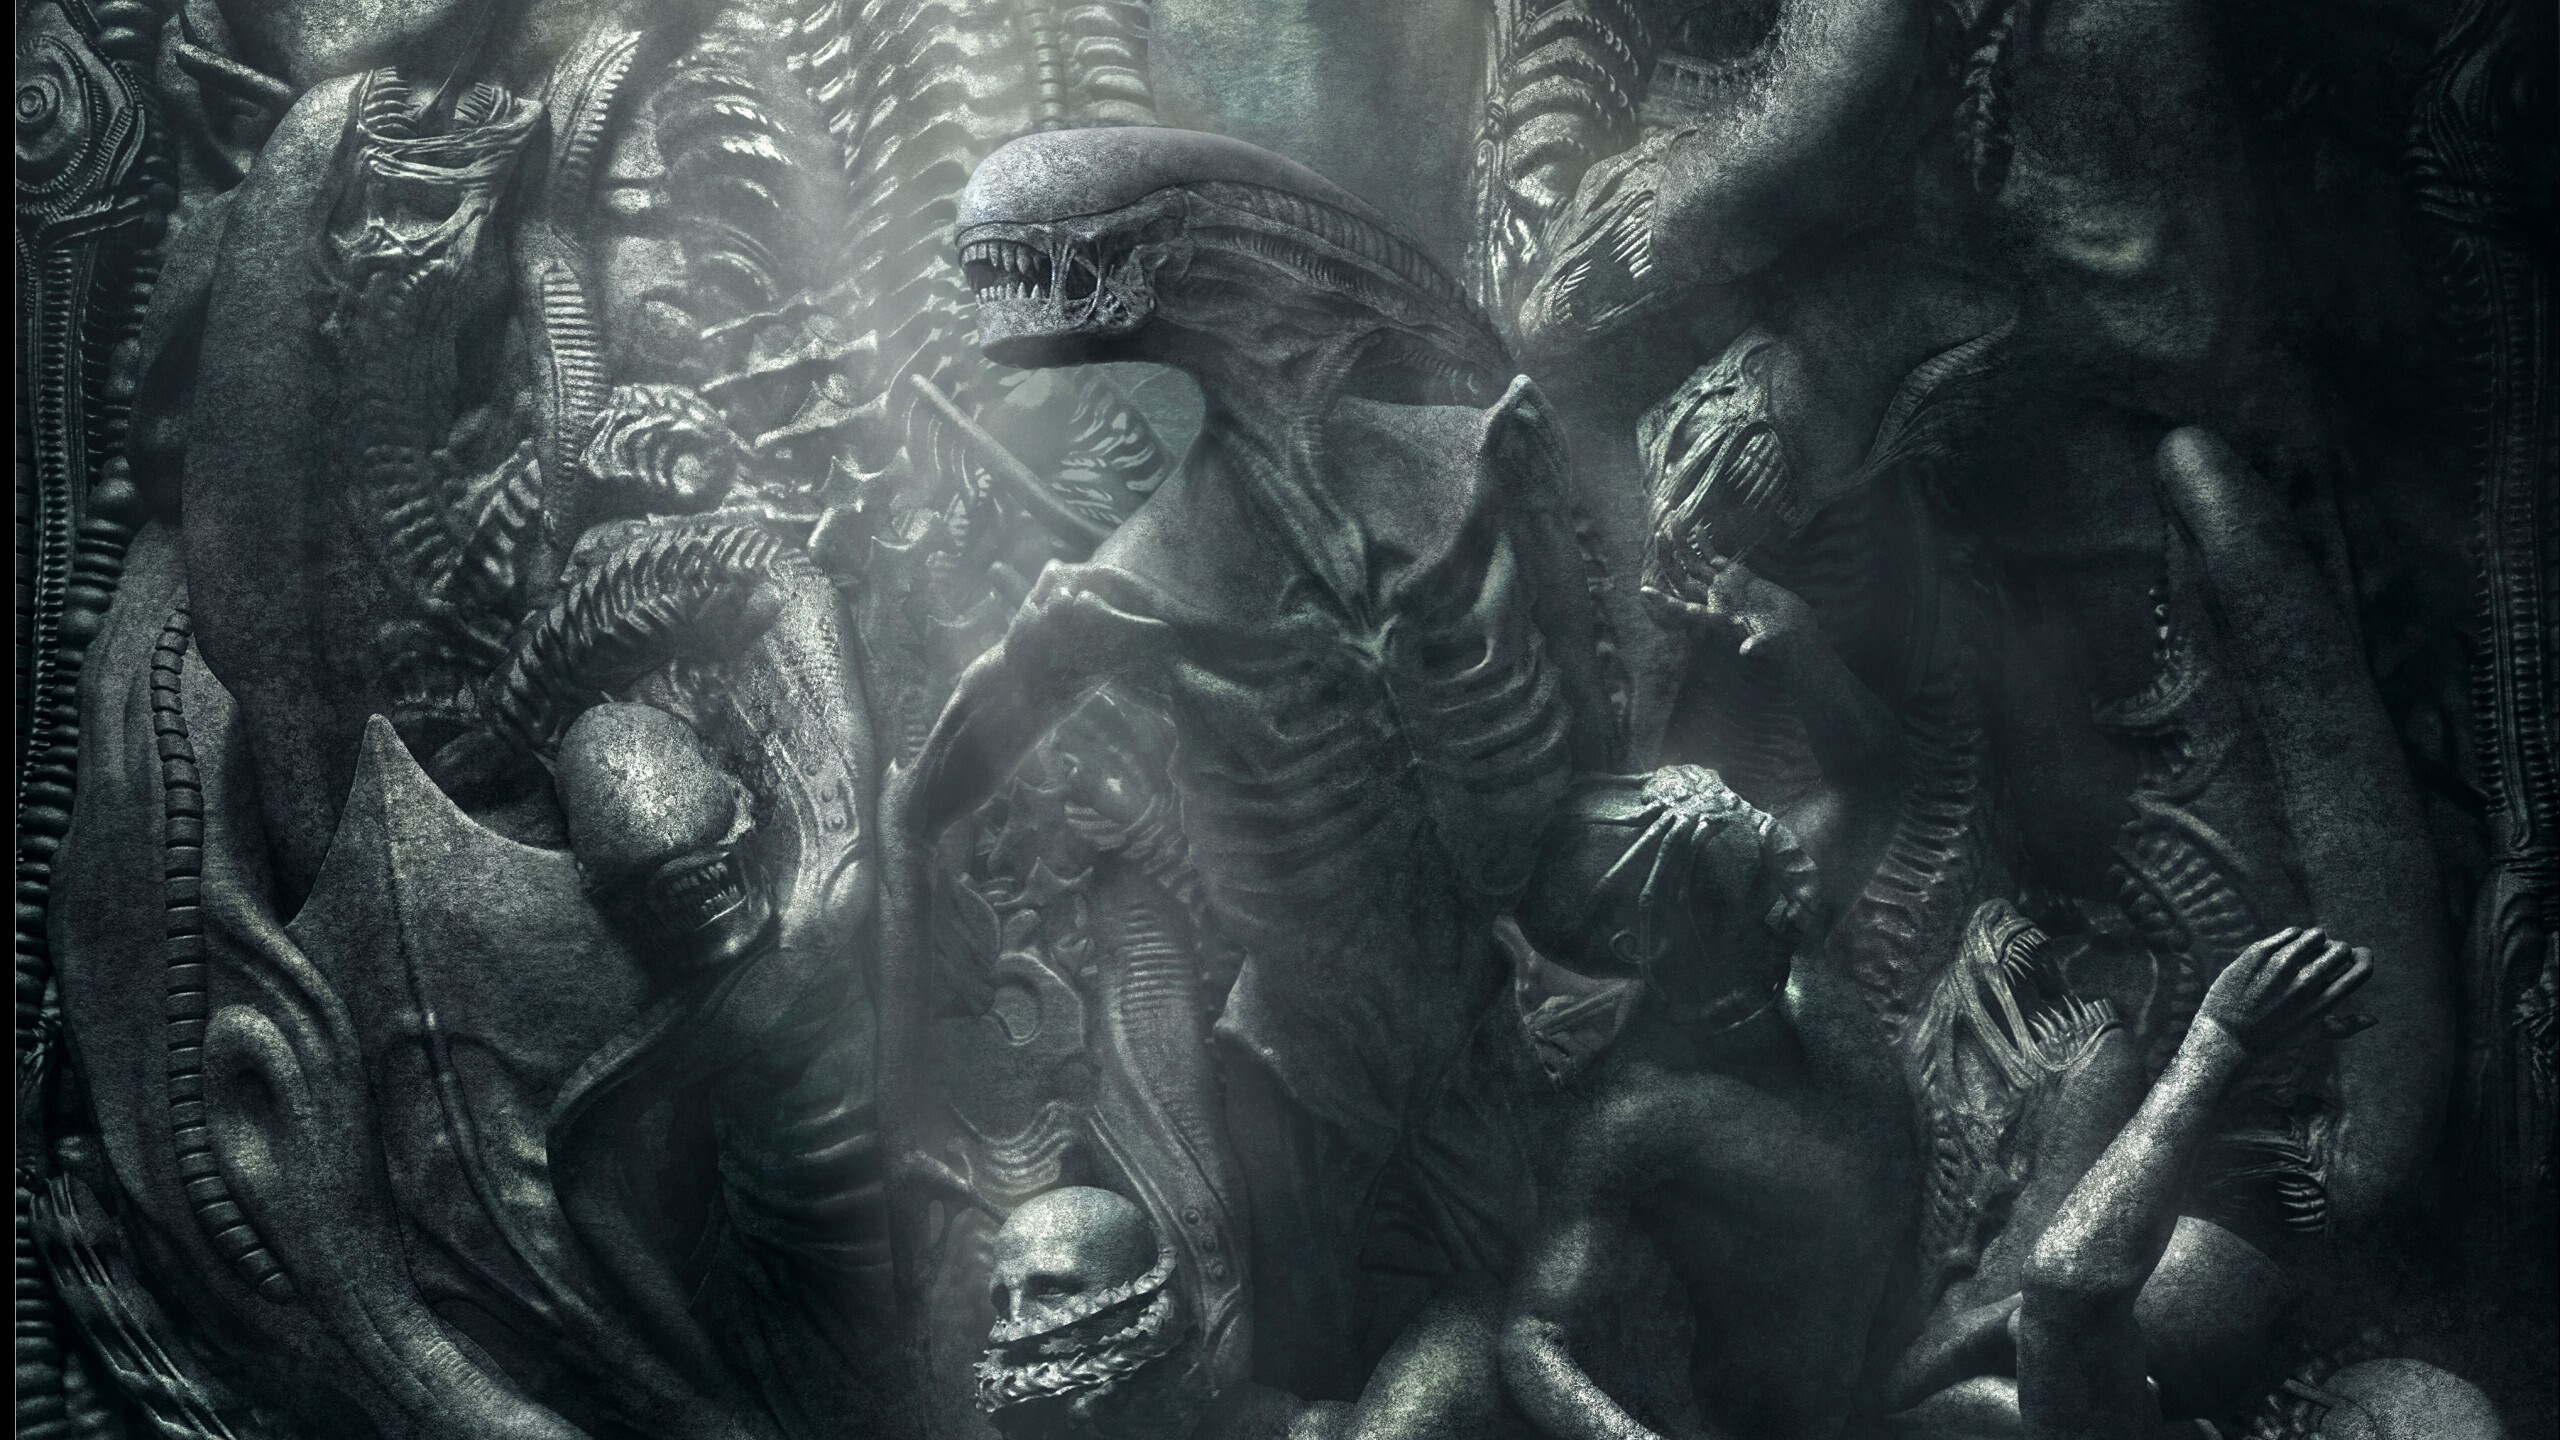 H.R. Giger: Theatrical Release Poster, Alien: Covenant, Ridley Scott, Starring Michael Fassbender, Katherine Waterston, Billy Crudup, Danny McBride, Demian Bichir. 2560x1440 HD Wallpaper.